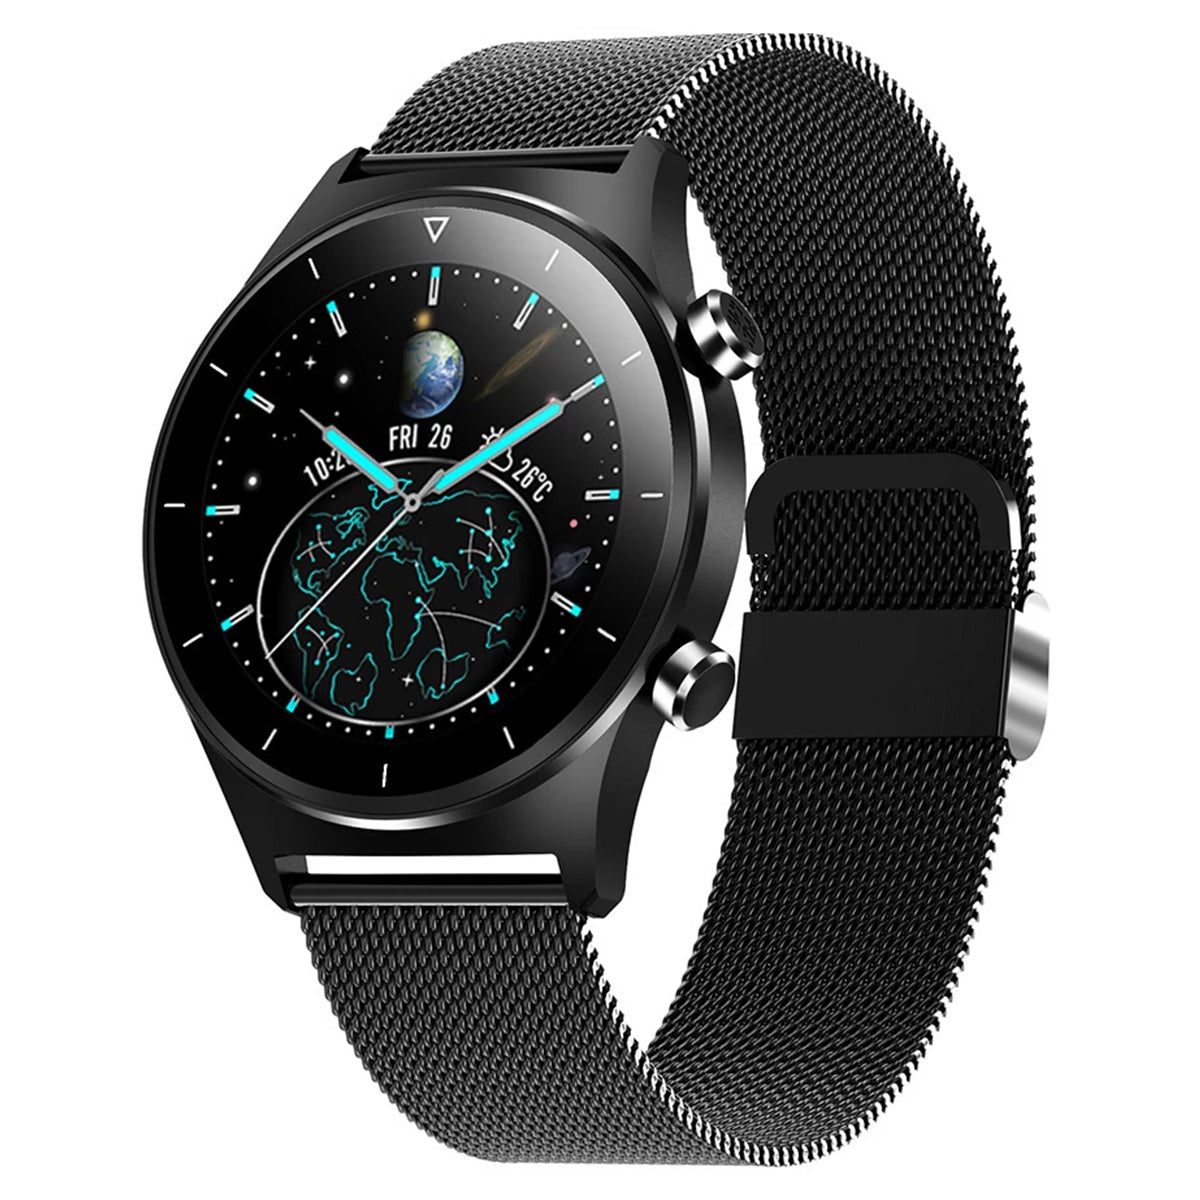 Fralugio Reloj Smartwatch Smart Band E13 Full Touch Metal Hd